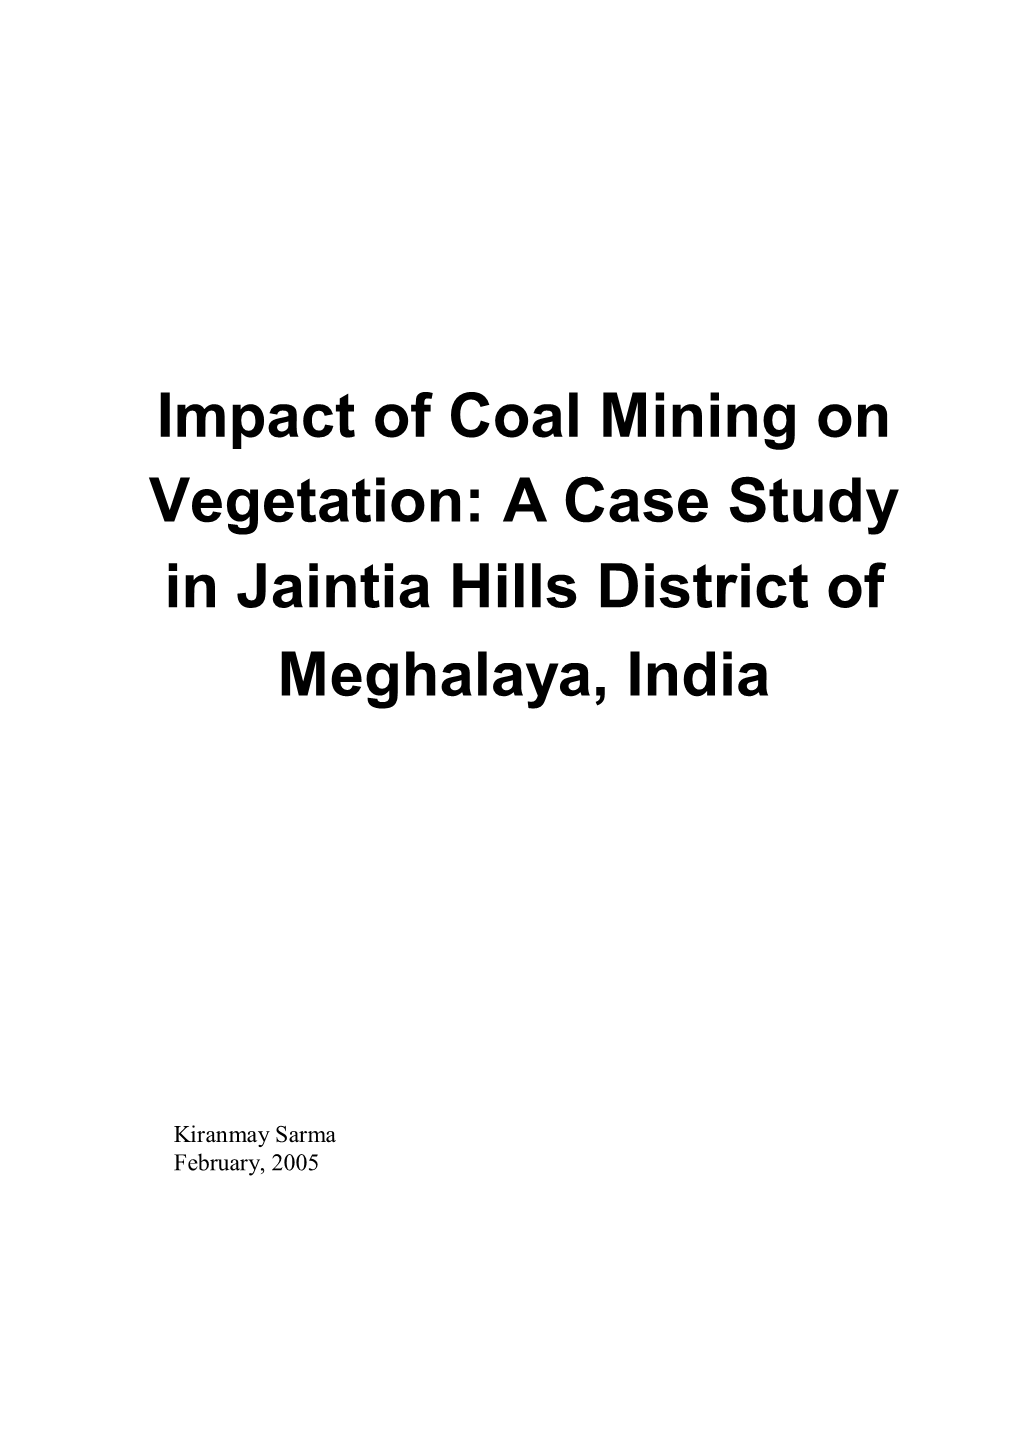 Impact of Coal Mining on Vegetation: a Case Study in Jaintia Hills District of Meghalaya, India